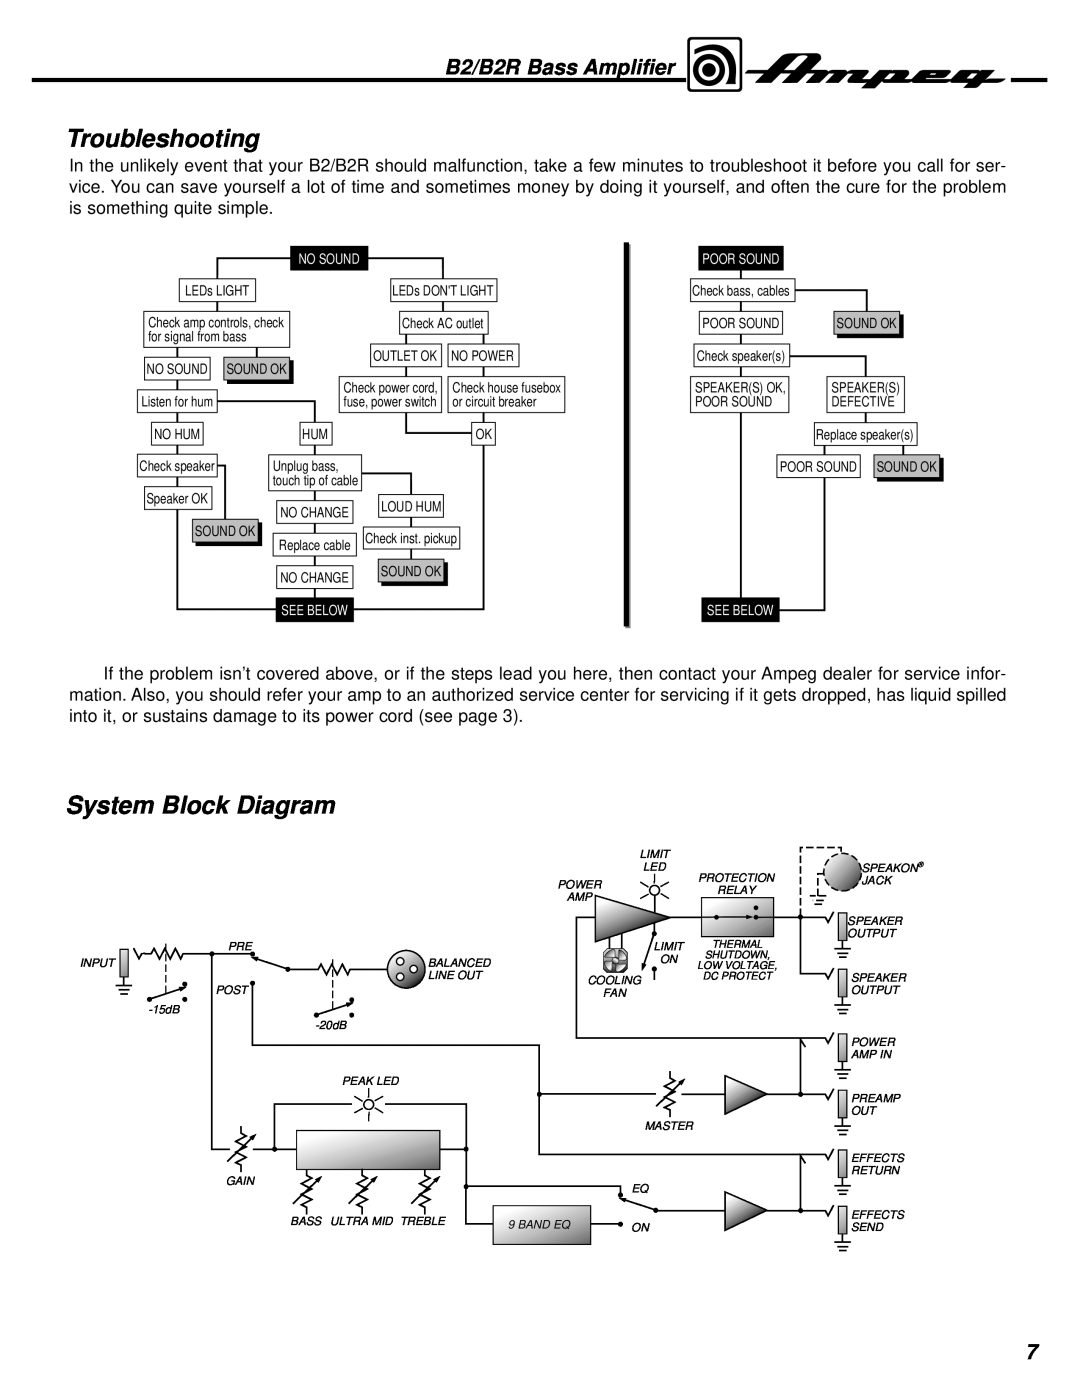 Ampeg manual Troubleshooting, System Block Diagram, B2/B2R Bass Amplifier 